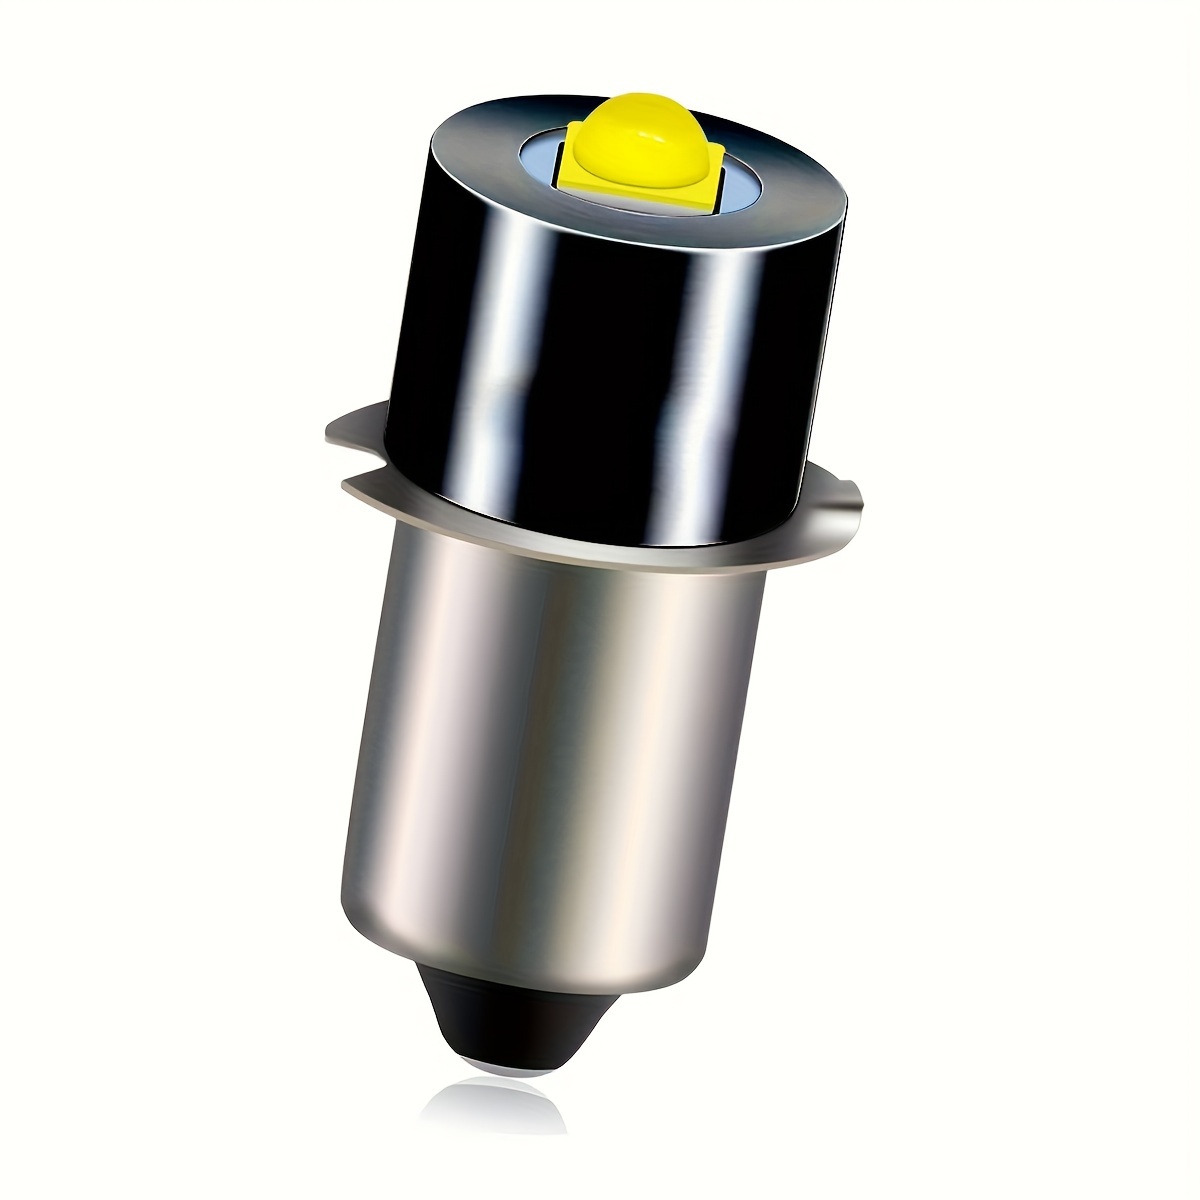 6pcs P13.5S LED Flashlight Torch Lamp Upgrade Light Bulbs 3V White Super  Bright